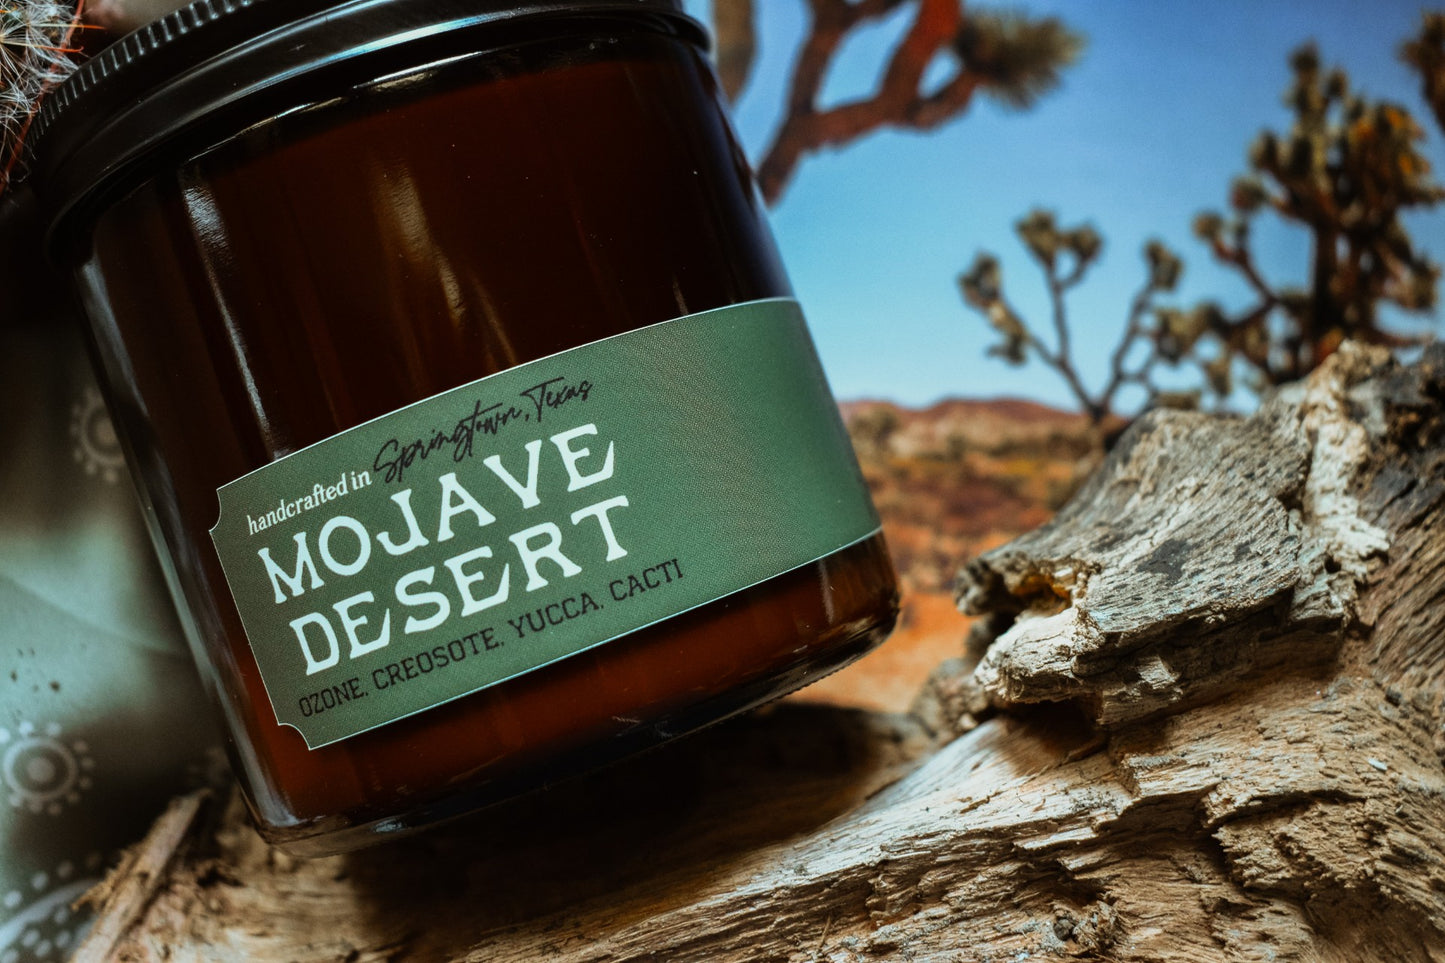 MOJAVE DESERT - Yucca, Creosote, Cacti